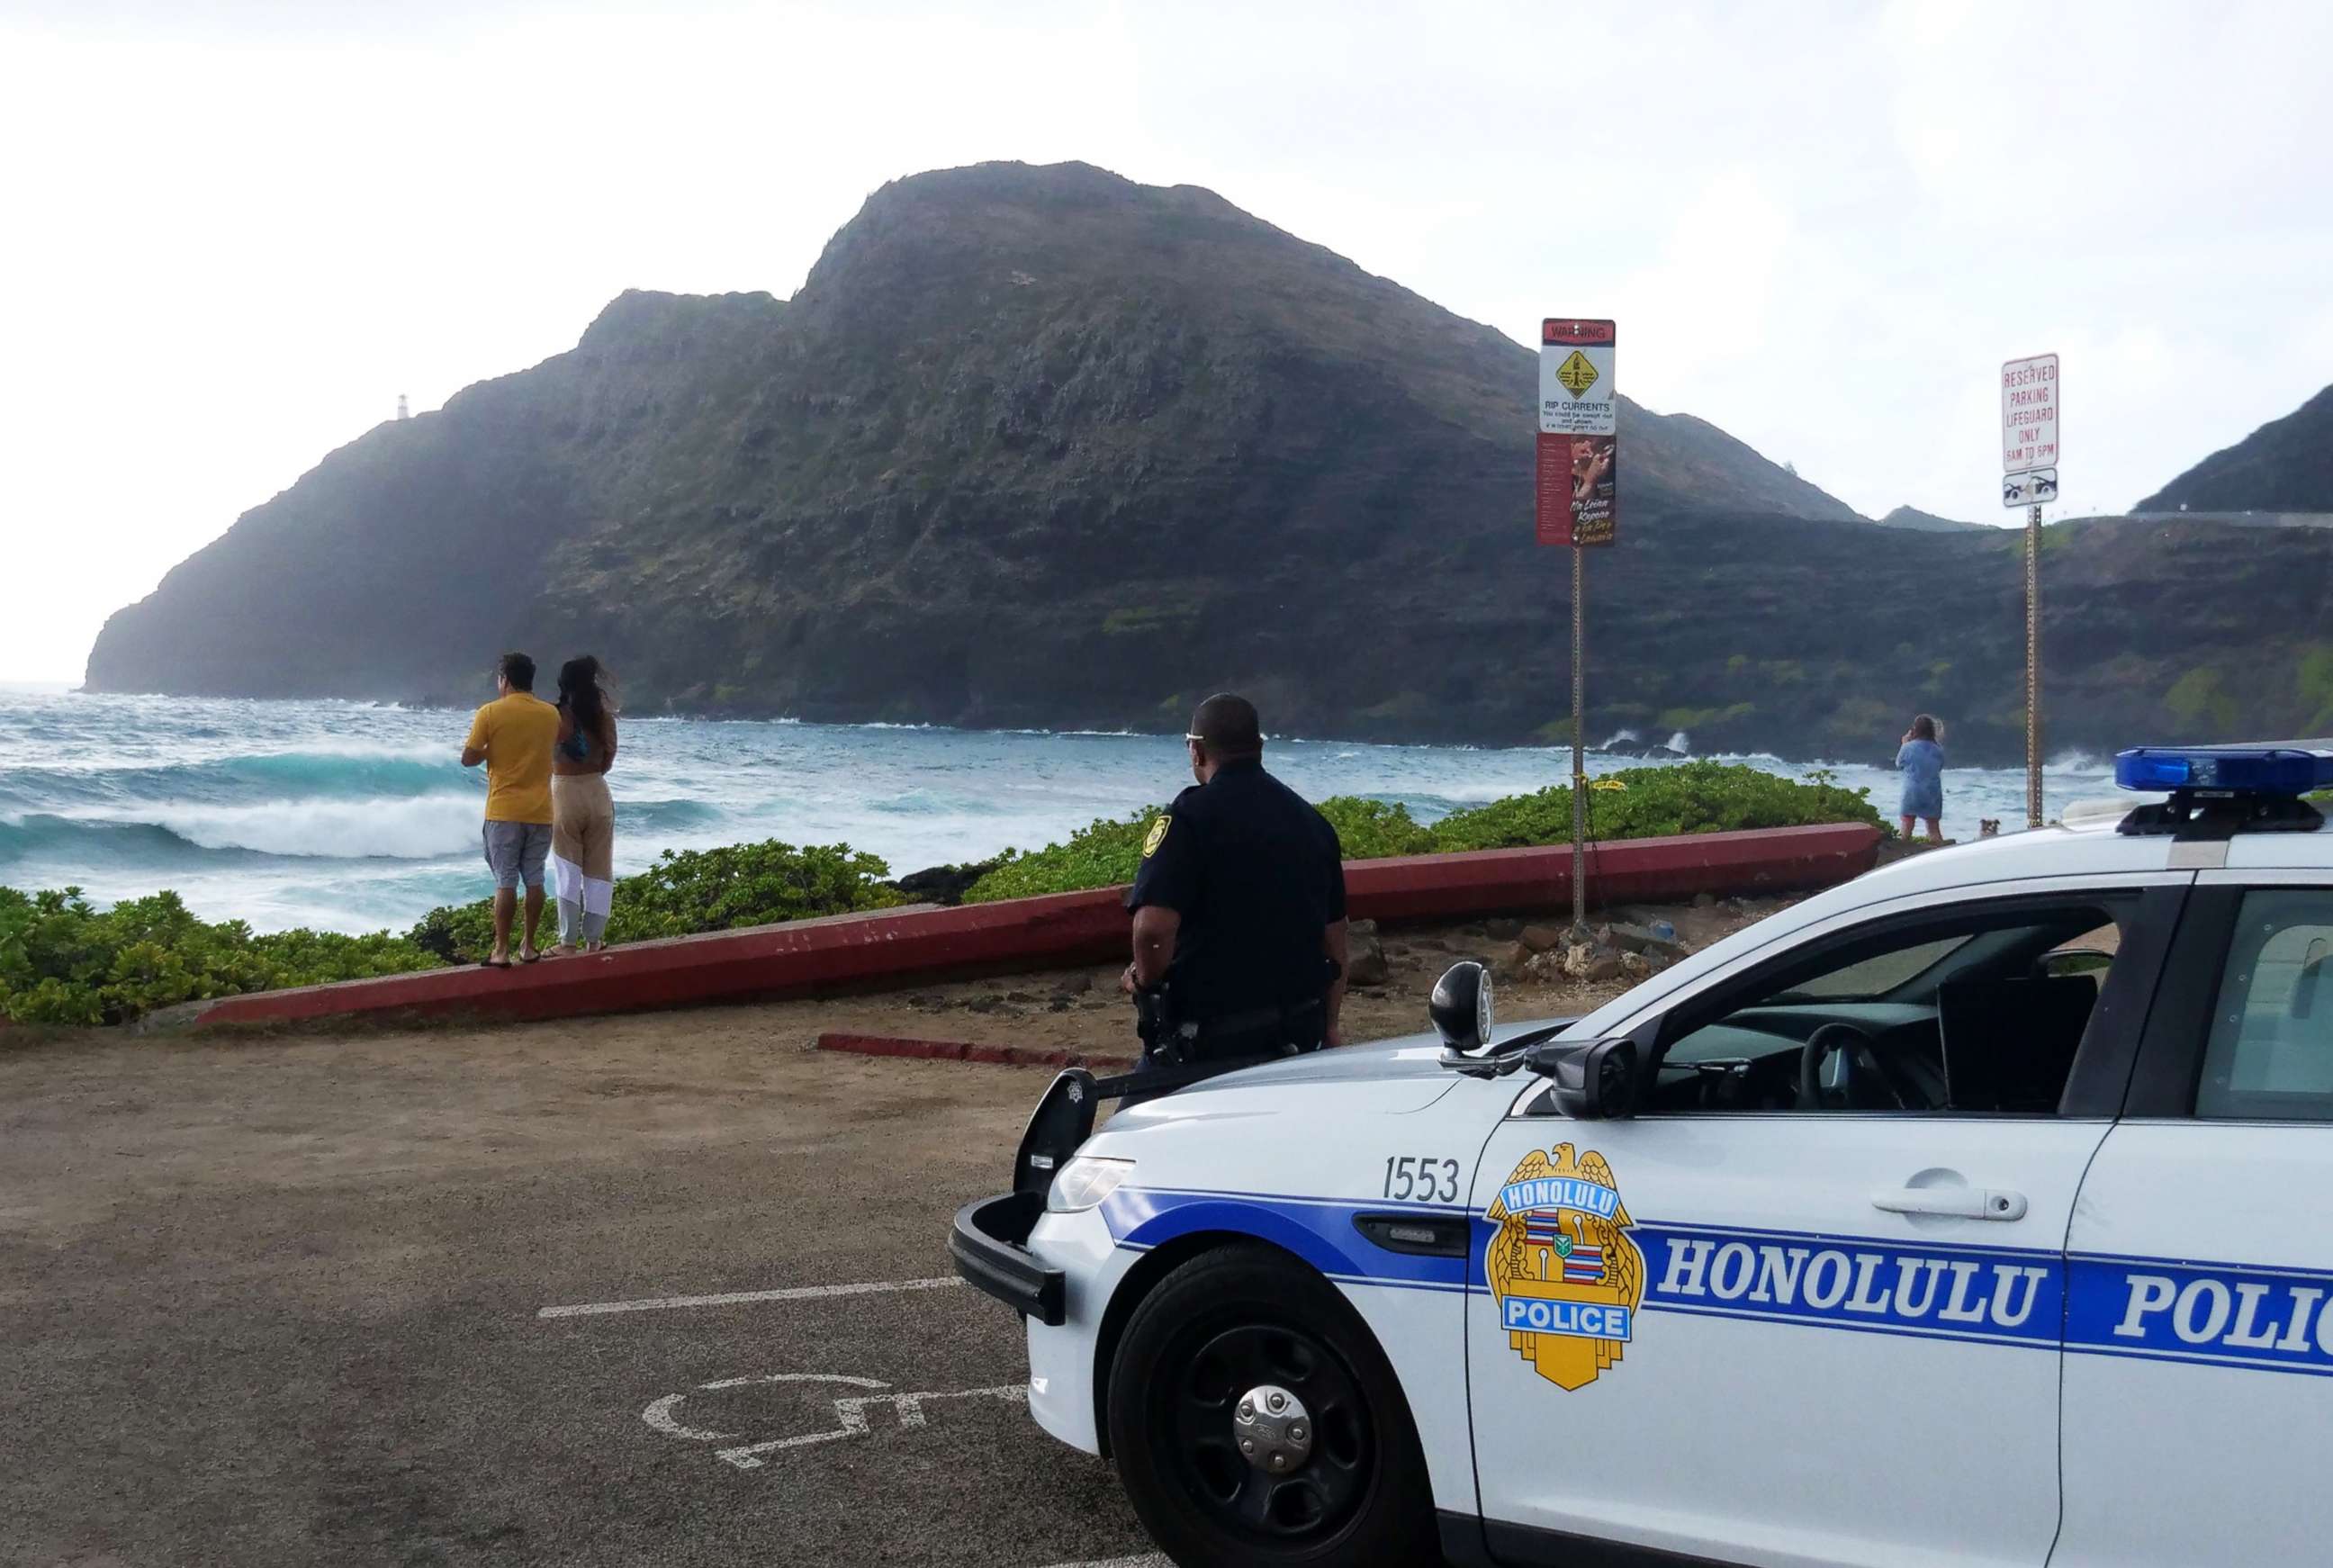 Hilton Hawaiian Village to temporarily close amid coronavirus pandemic